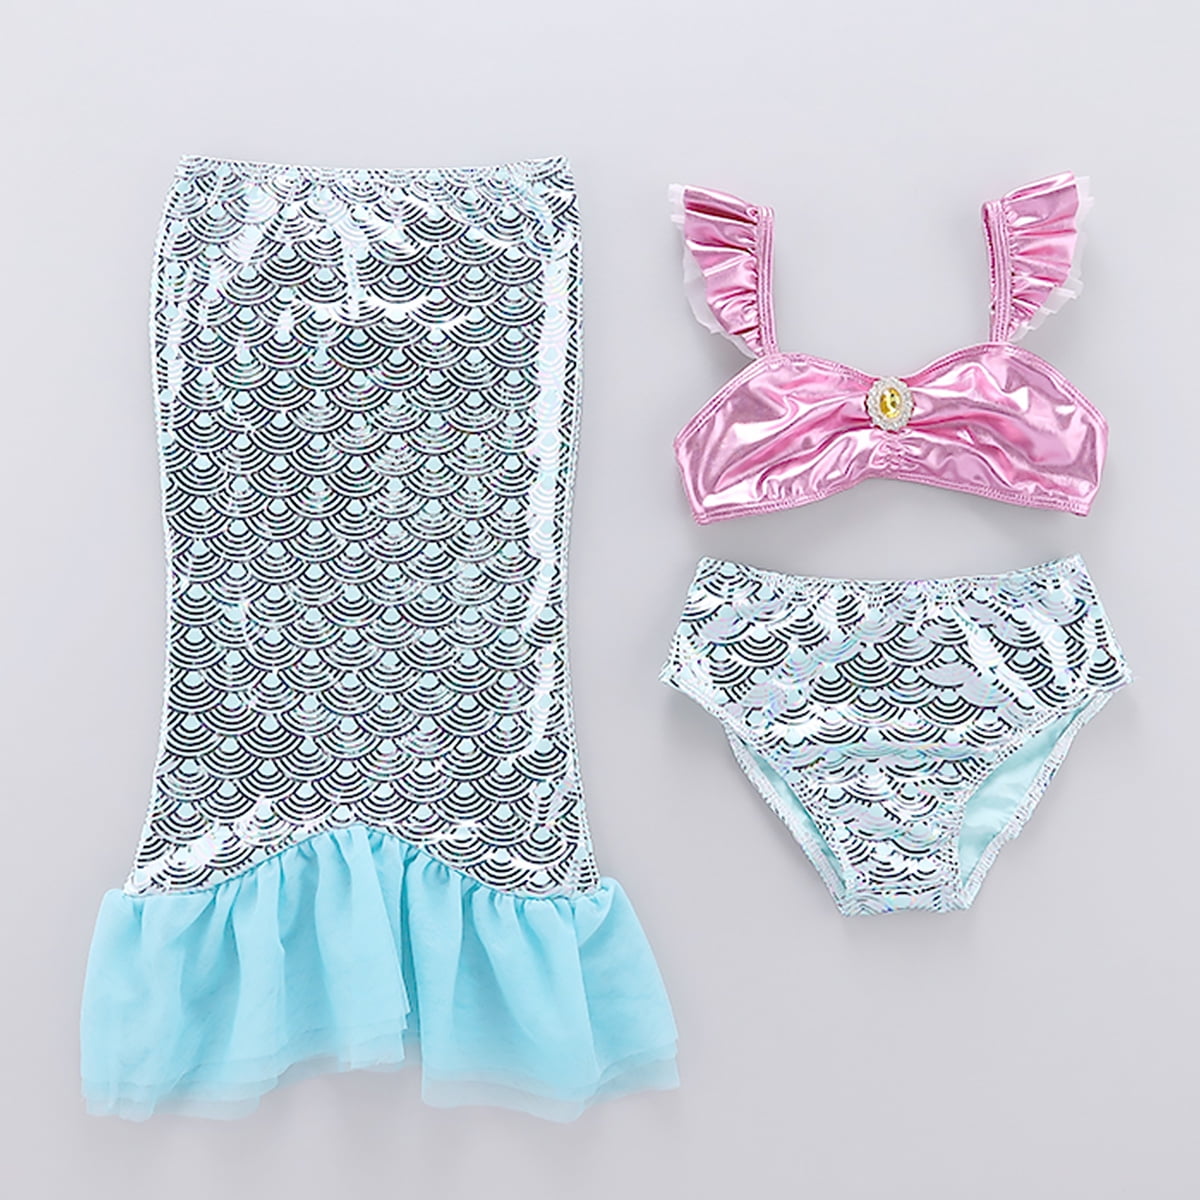 Danvren Girls Swimsuit Mermaid Tails for Swimming Party Supplies Costume Swimwear Bikini 3 Pcs for 3-12Y 